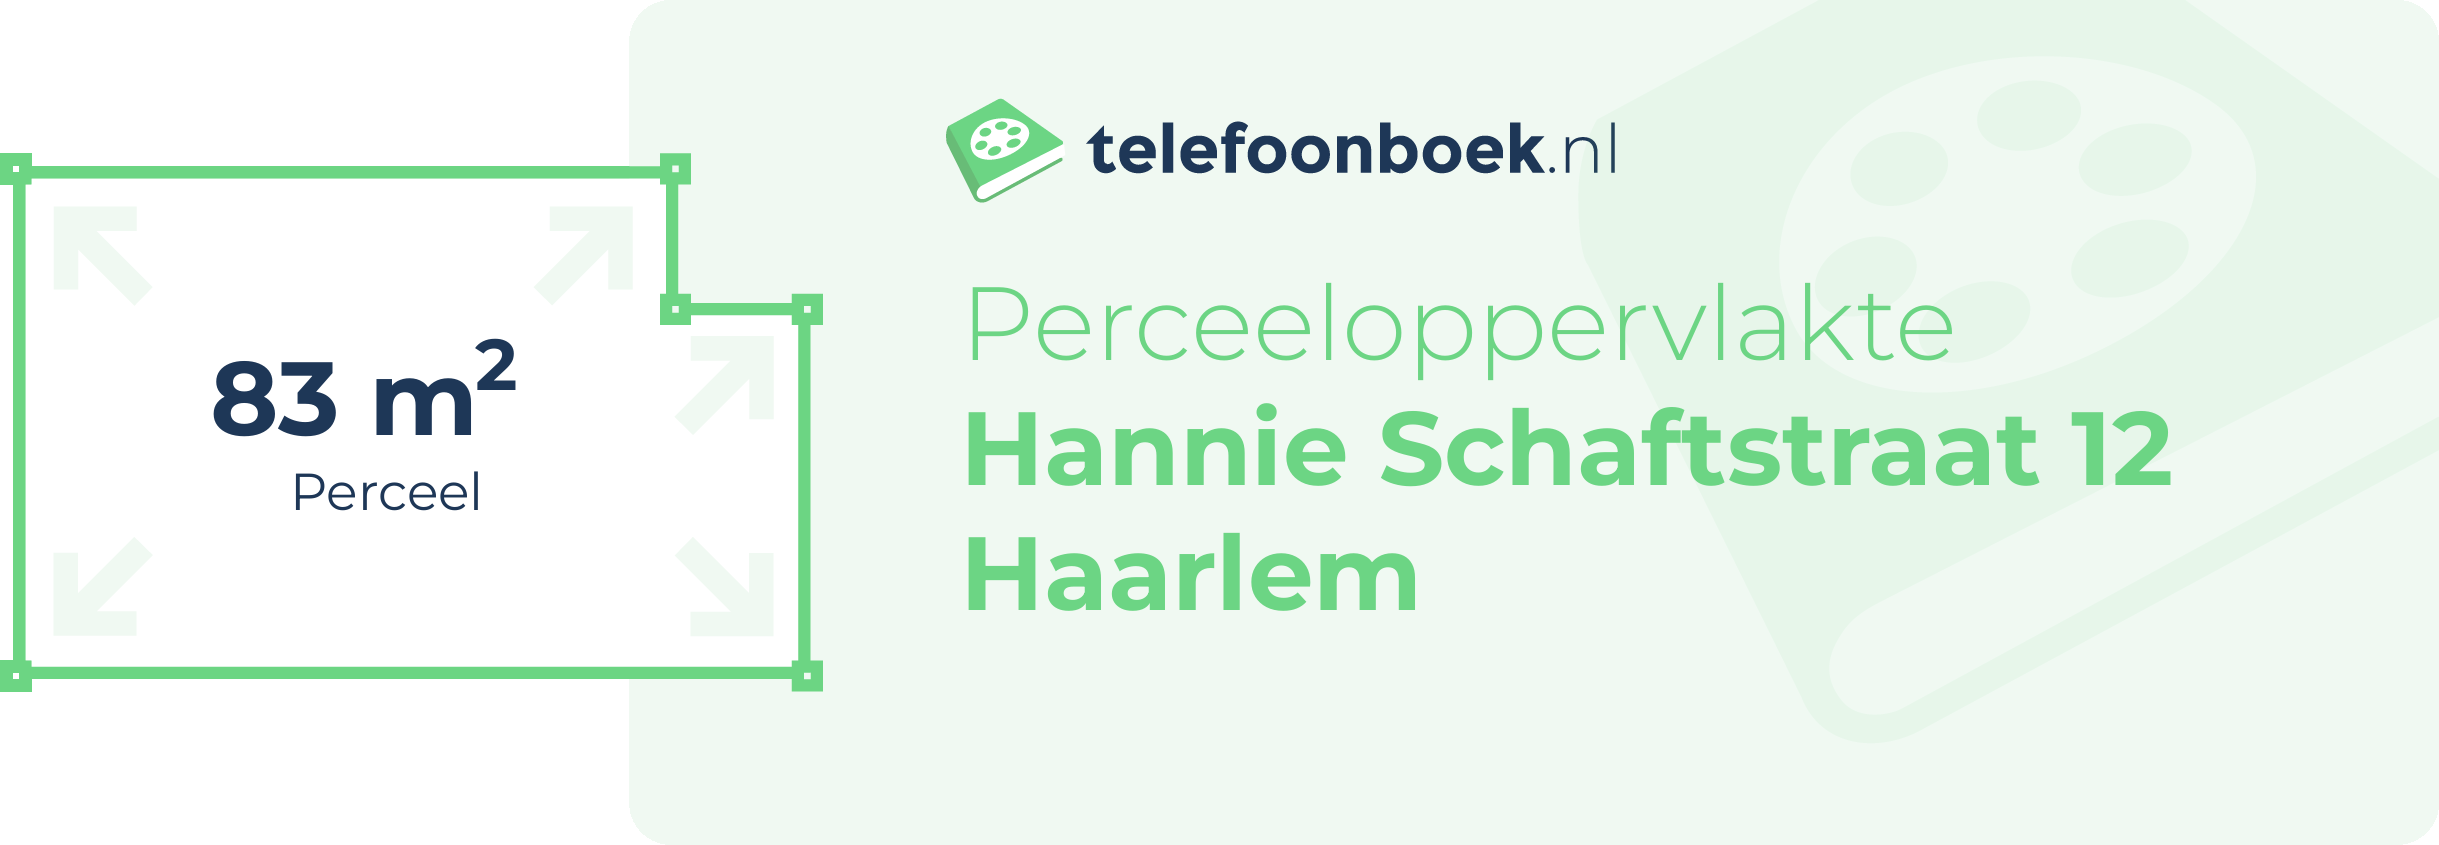 Perceeloppervlakte Hannie Schaftstraat 12 Haarlem